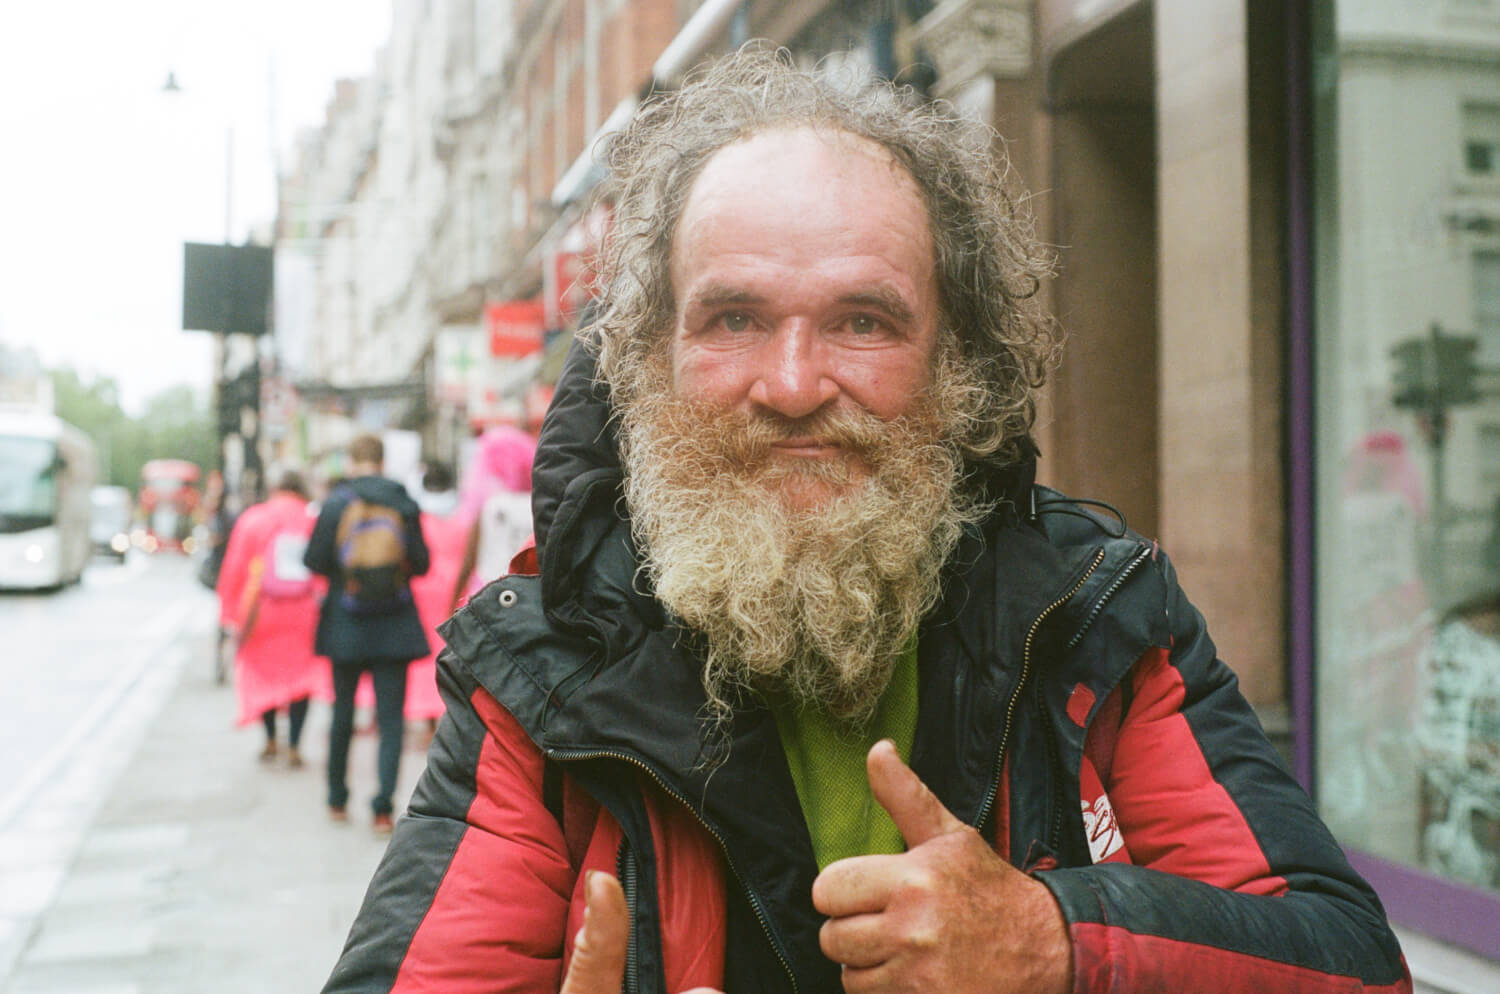 Homeless gentleman - 5 Frames... From Bloomsbury to Kings Cross on Kodak Portra 400 and a Pentax ME Super - by Kush Karki